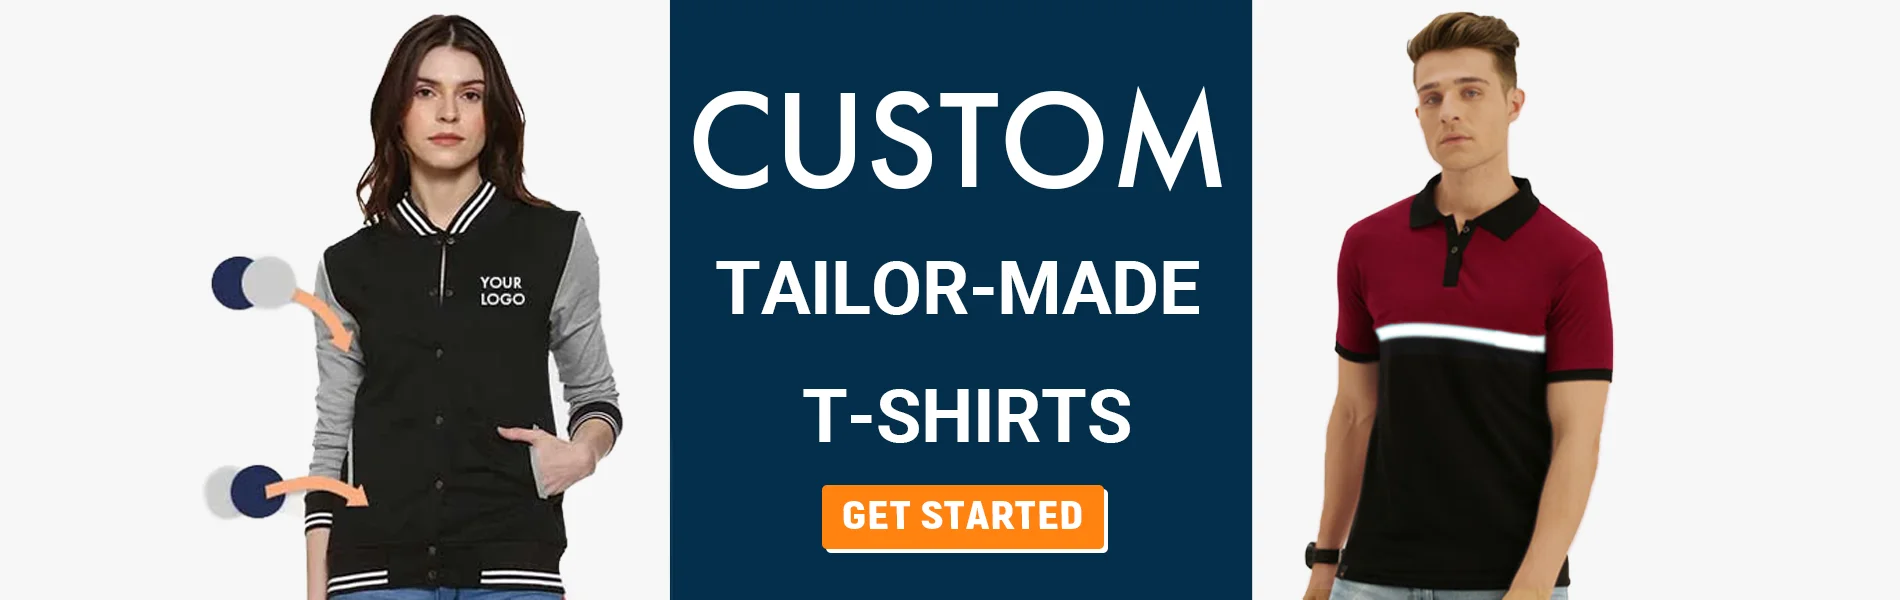 custom tailormade t-shirts delhi